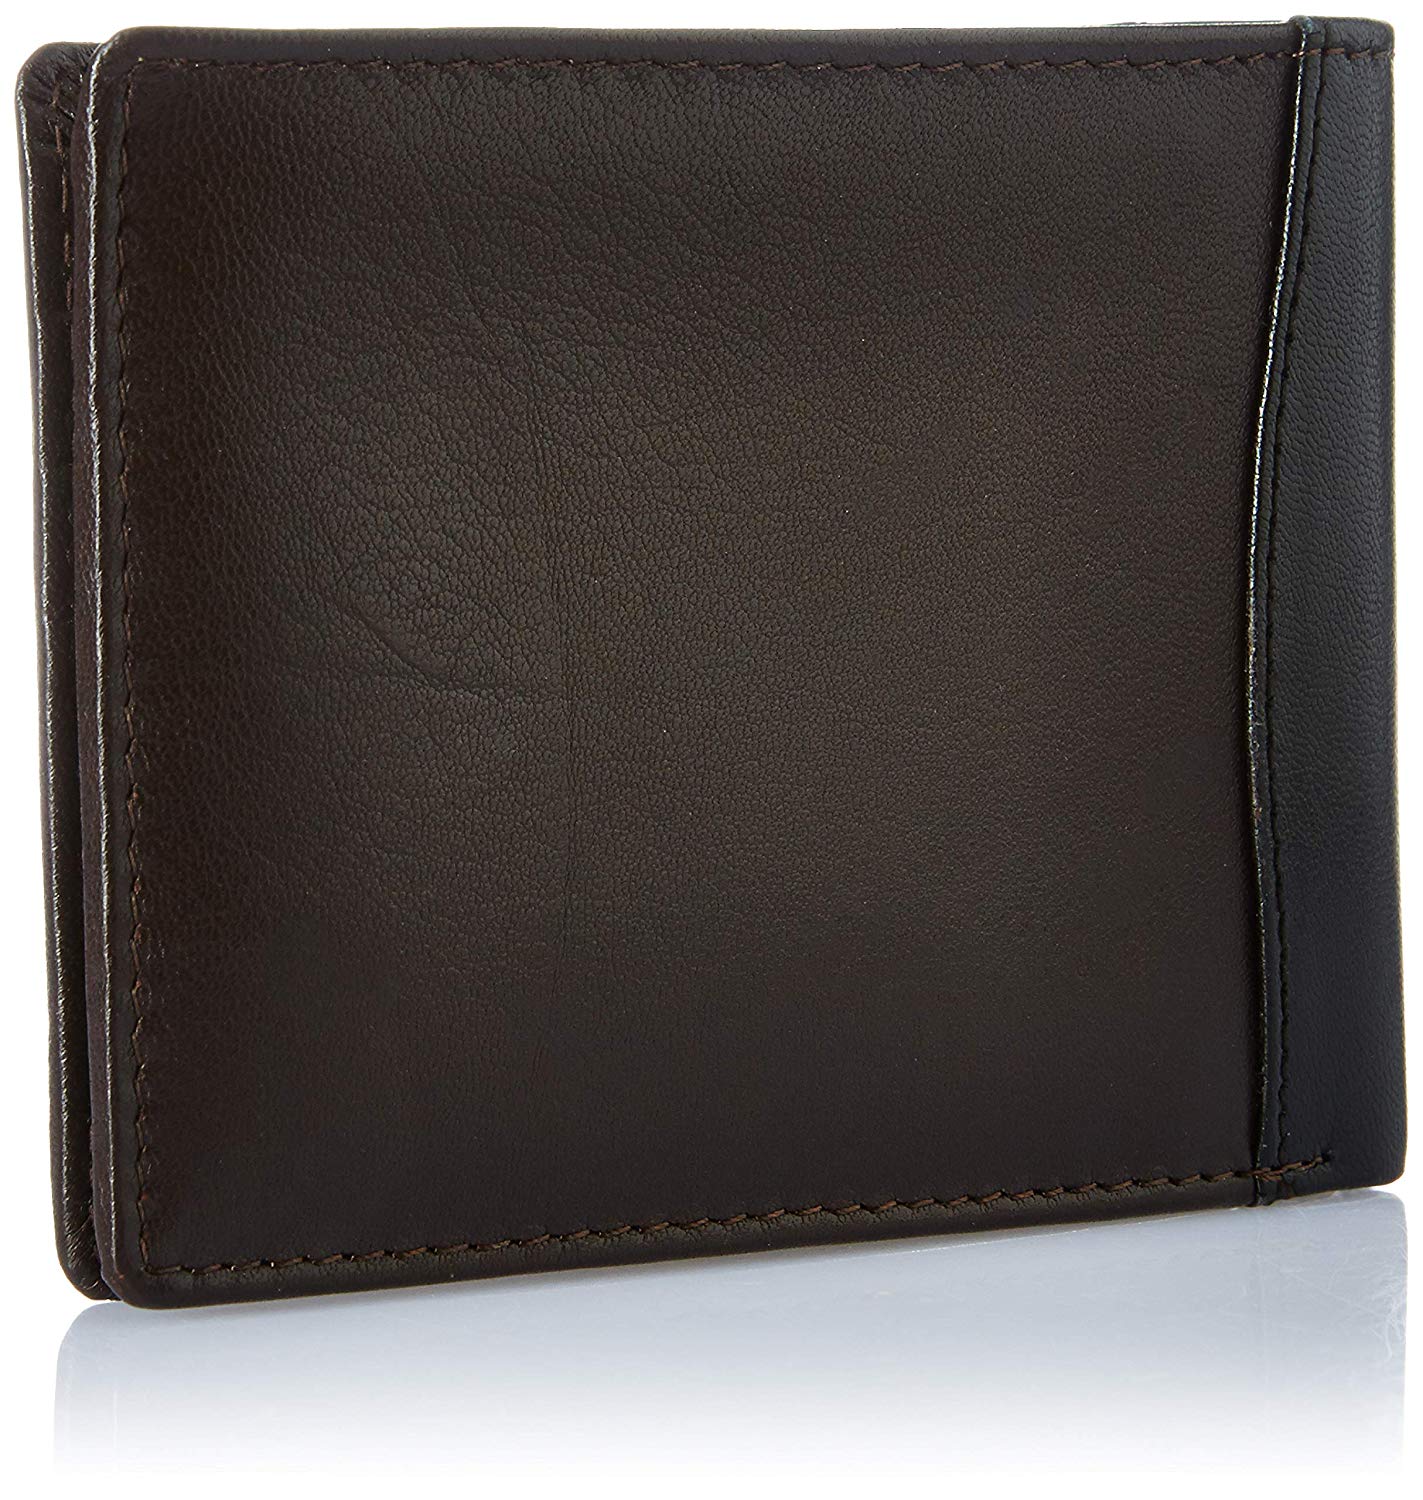 Brown Colour Bi-Fold Italian Leather Slim Wallet ( 6 Card Slot + 2 Hidden Compartment + Cash Compartment)